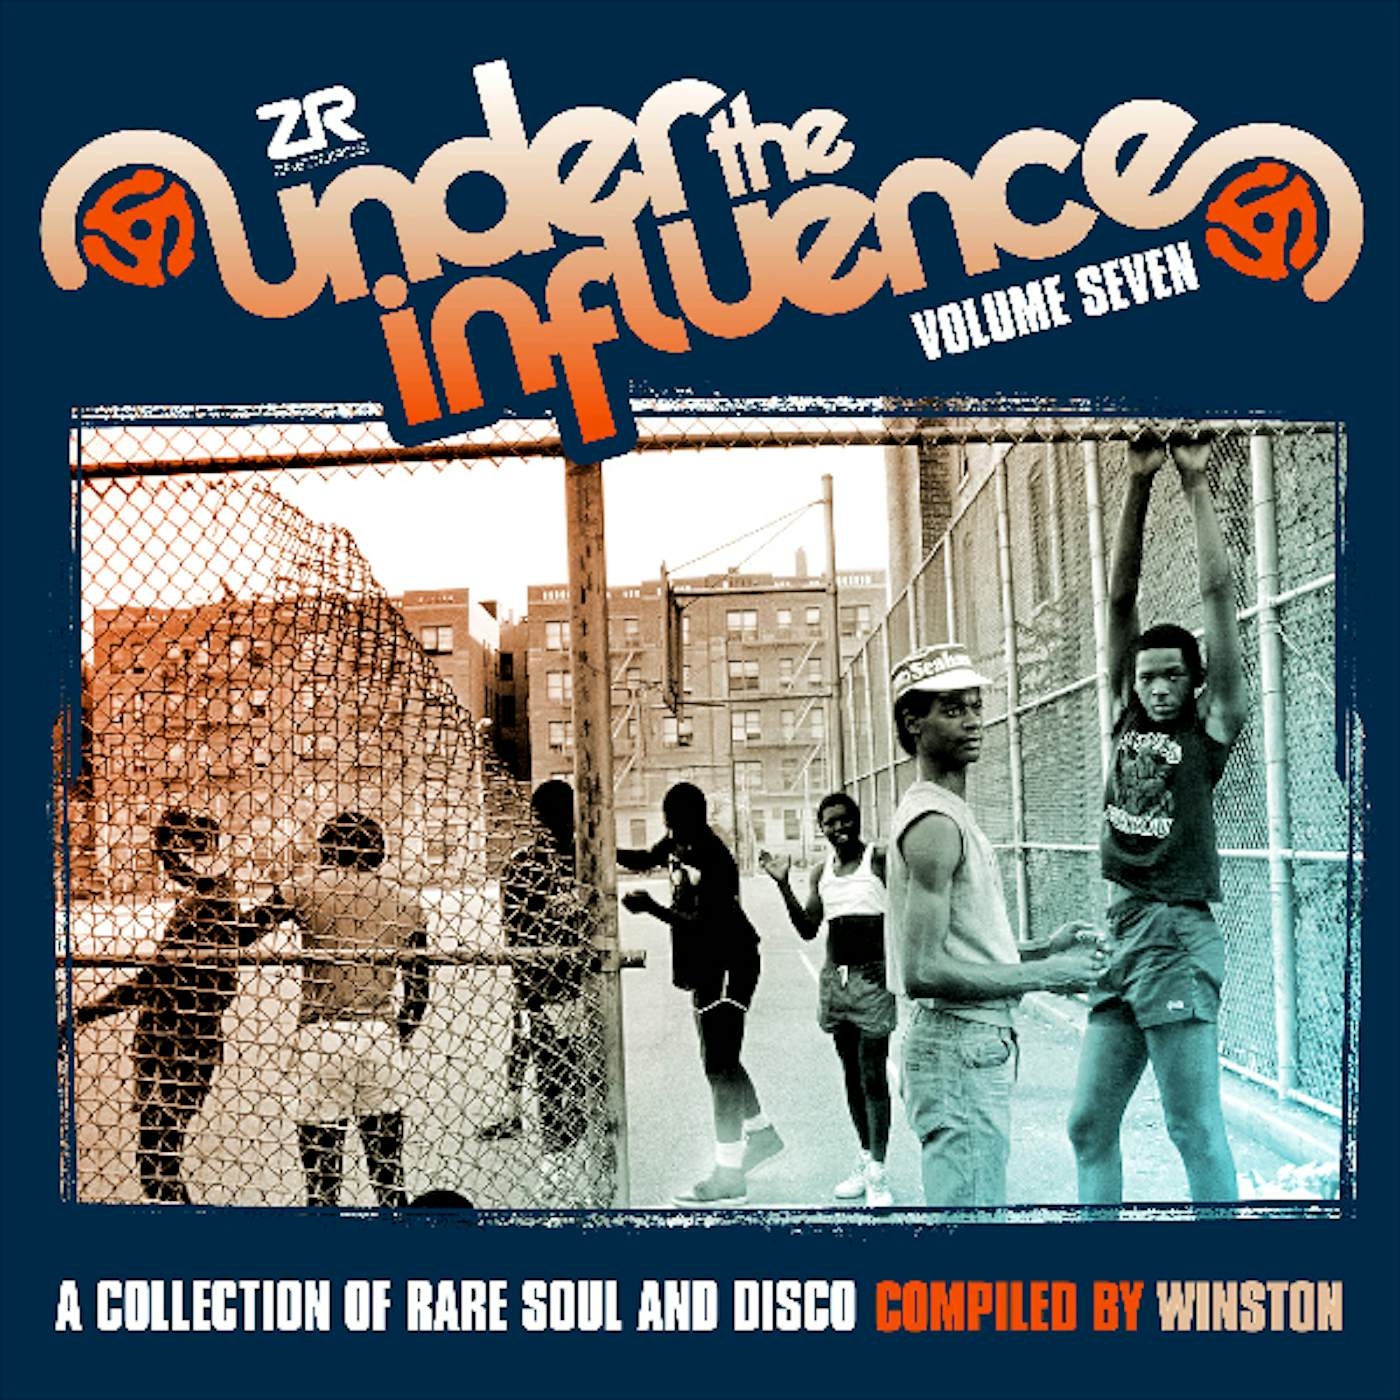 Winston UNDER THE INFLUENCE VOLUME SEVEN Vinyl Record